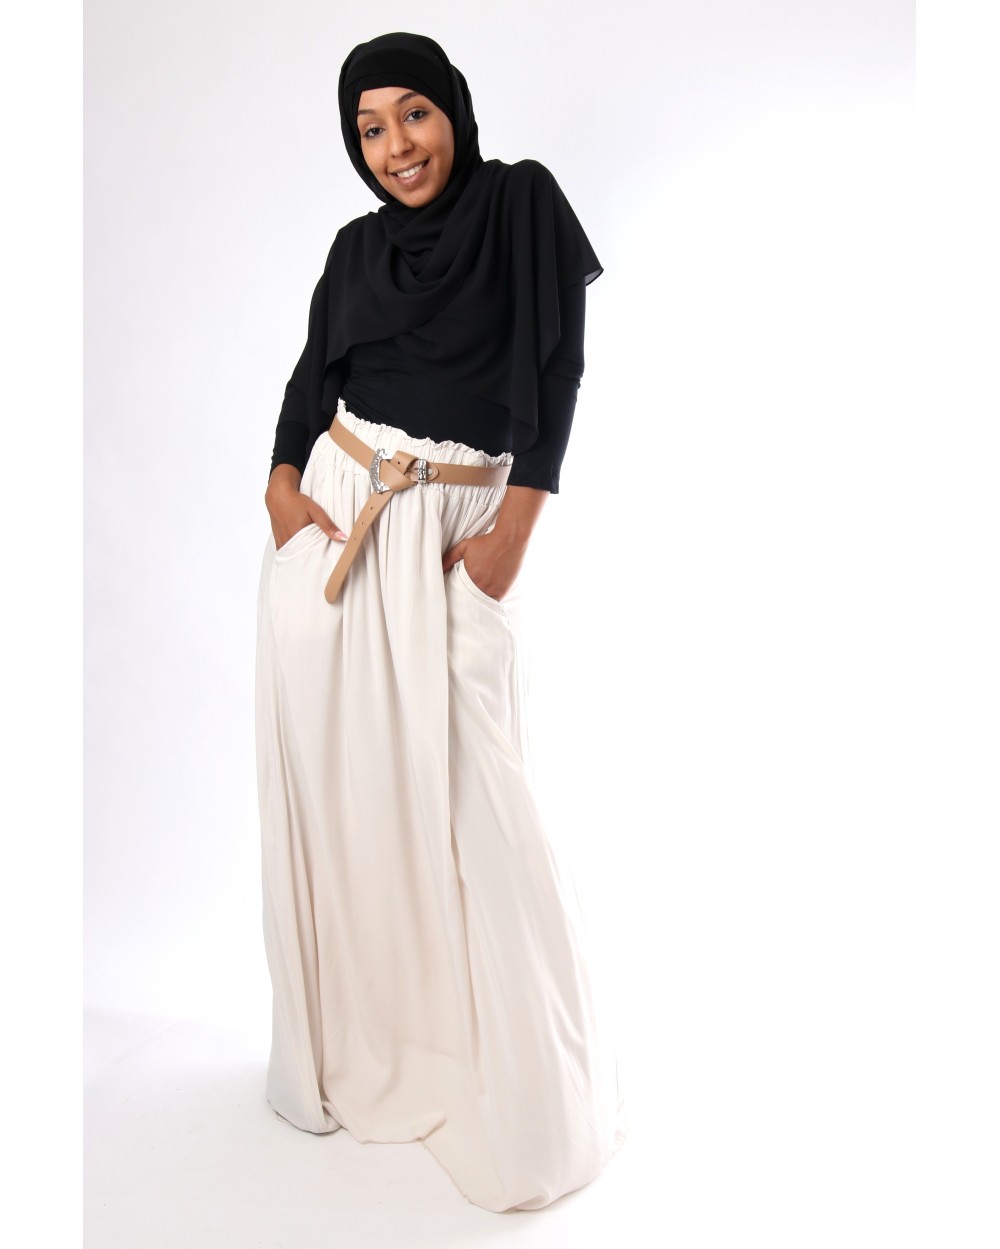 Jaouhar long skirt